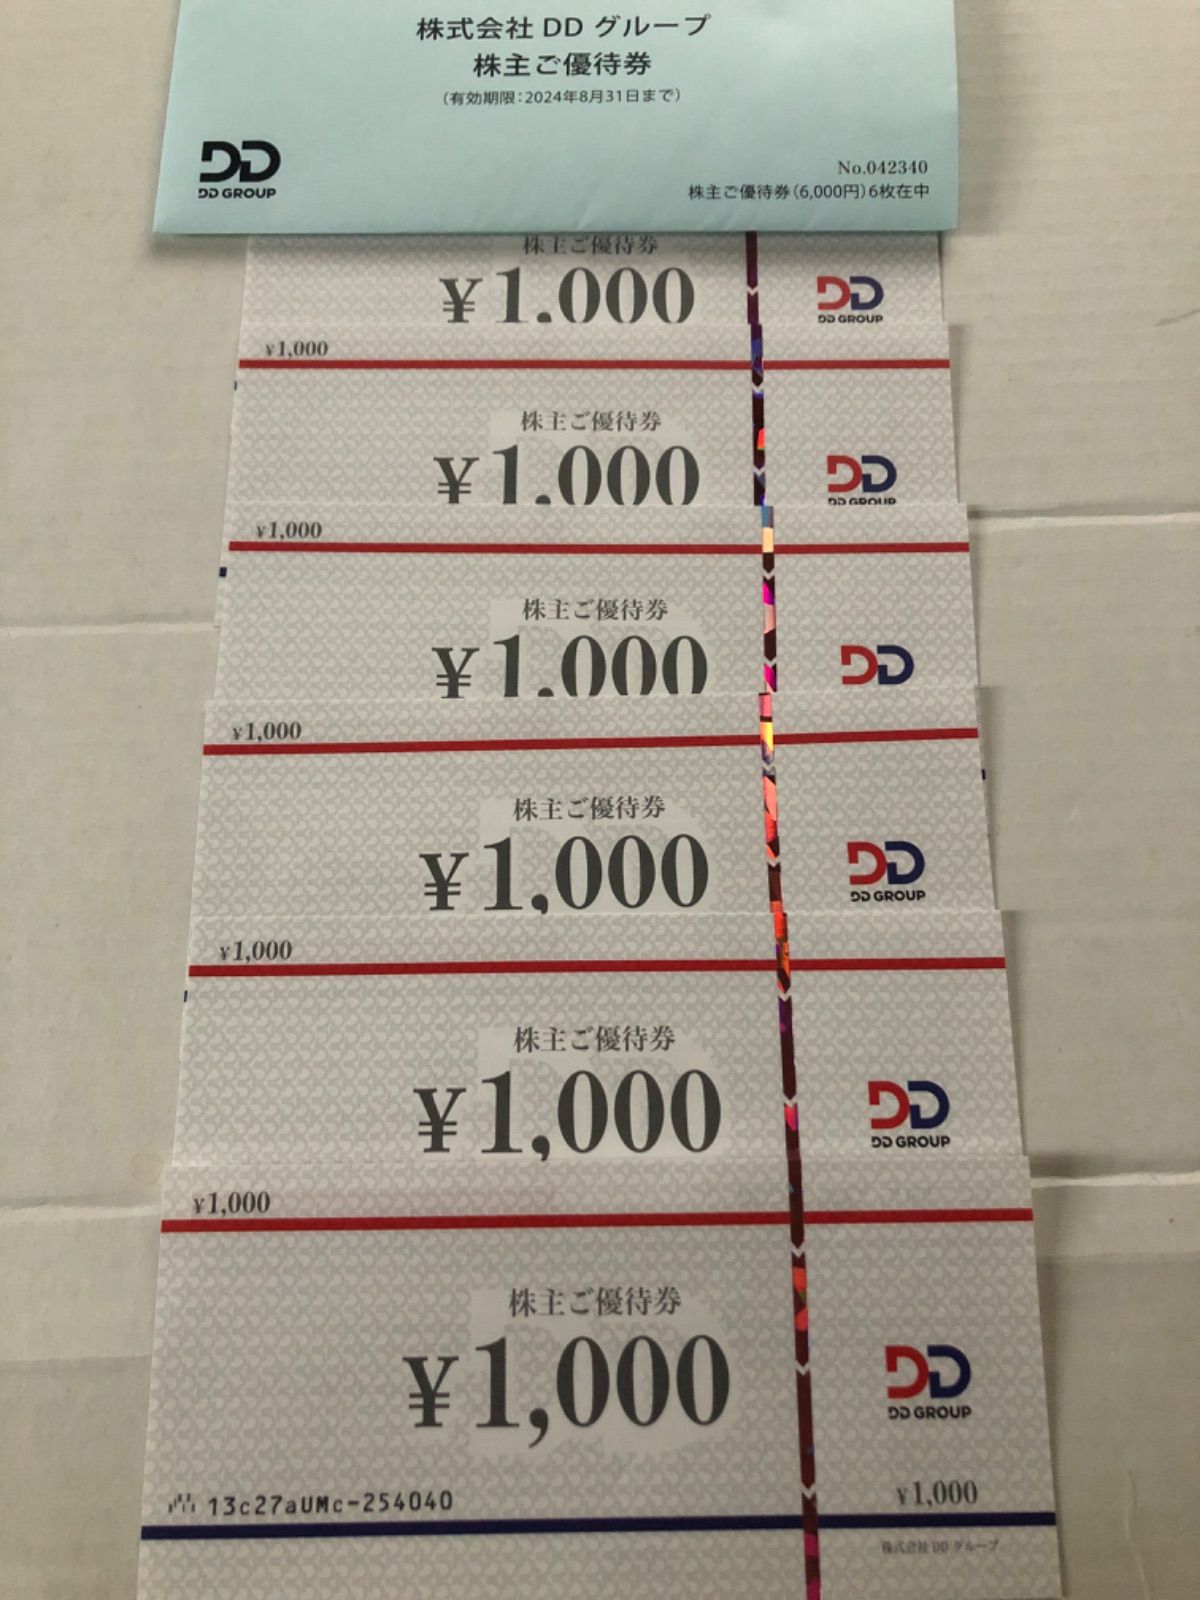 DDグループ 株主優待 6000円分 - metrocompactor.com